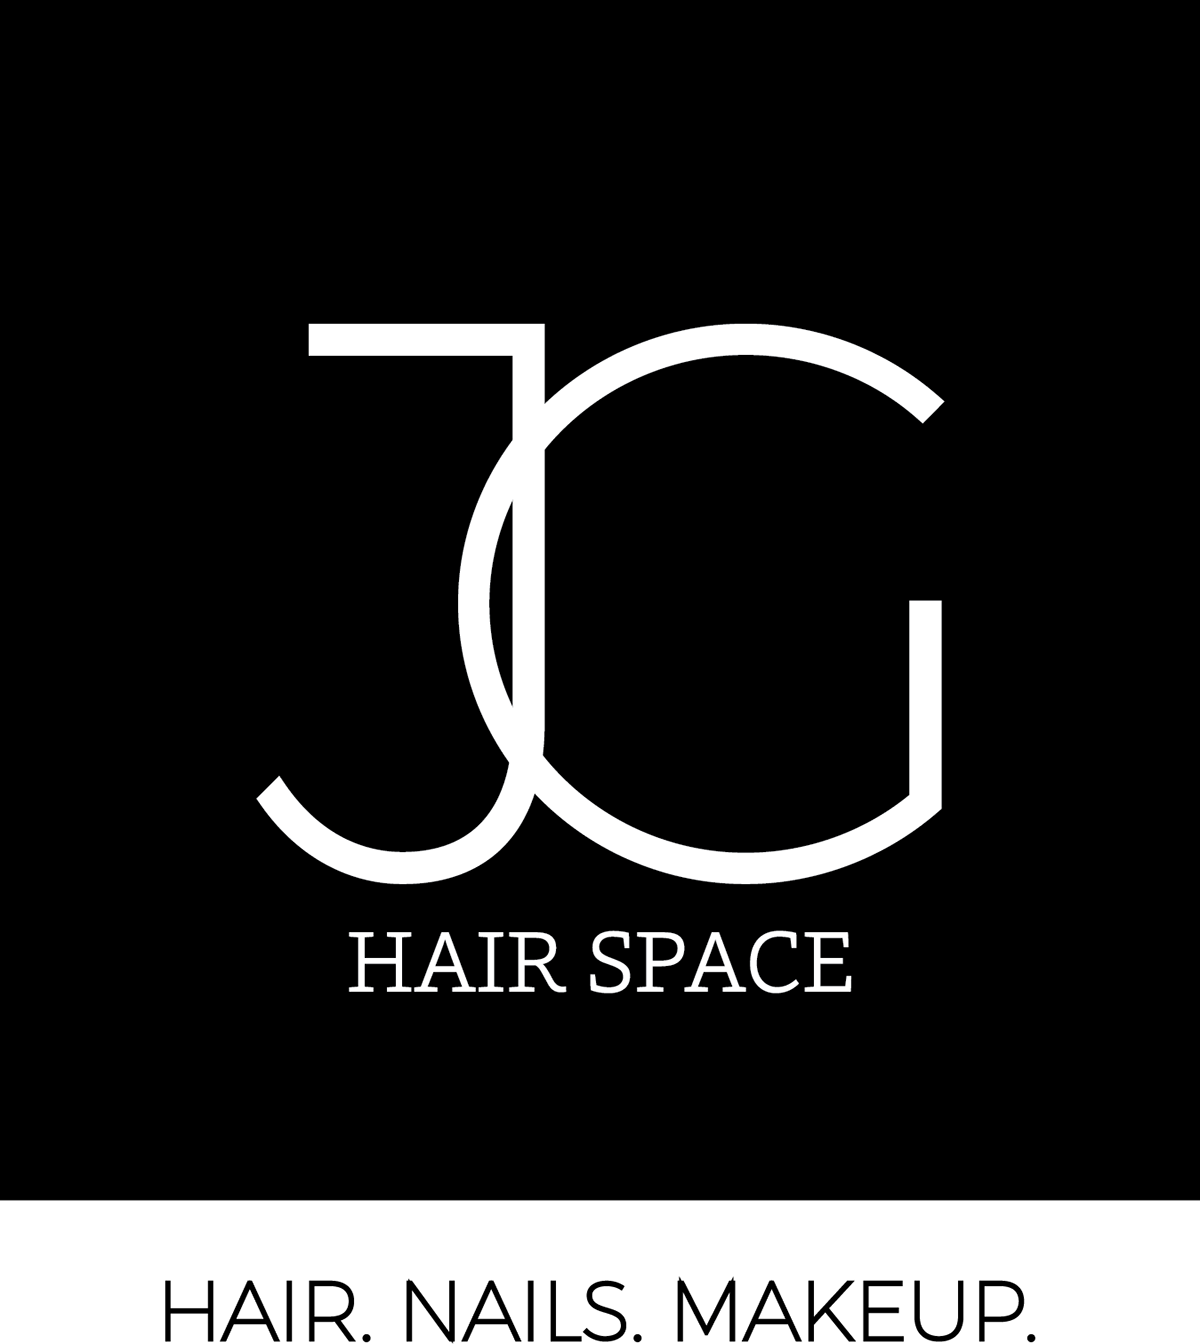 Jg Logo - JG Hair Space Logo and Business Cards on Behance